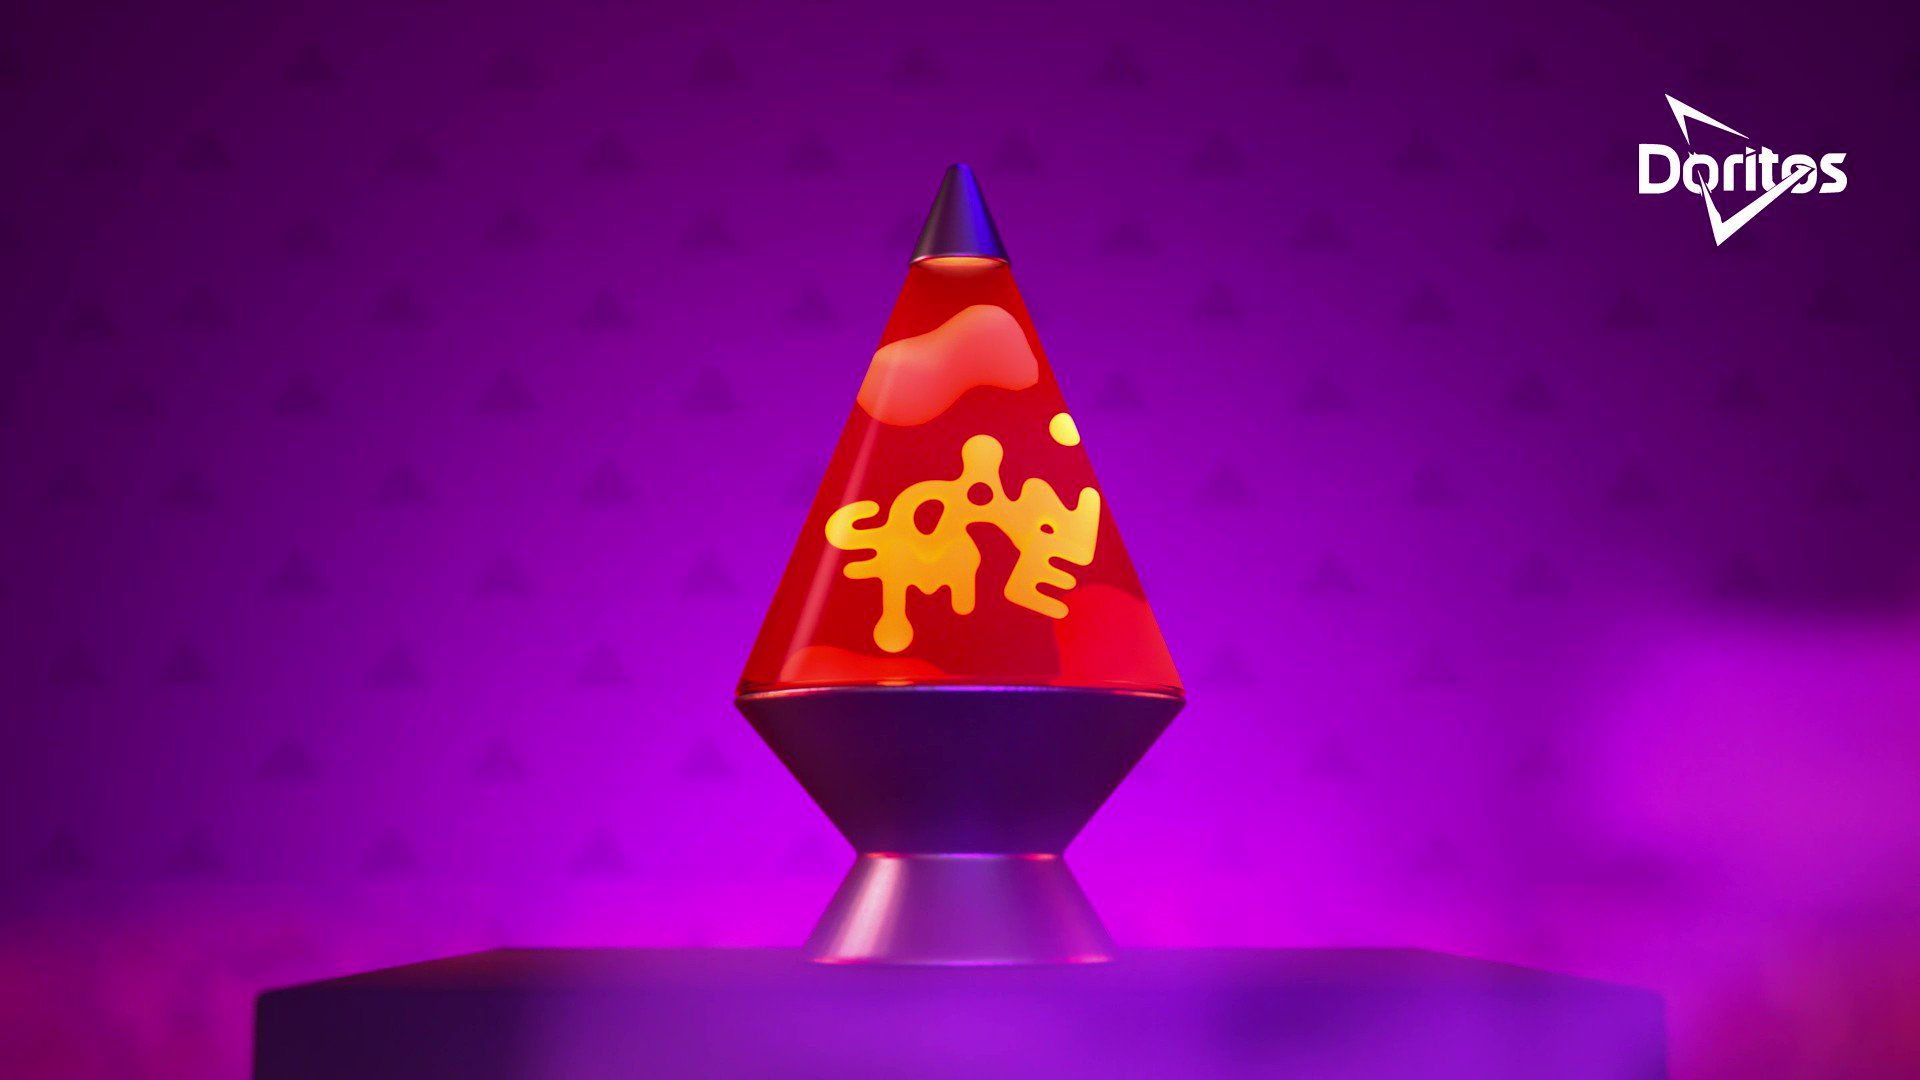 A lava lamp with Doritos seasoning. - Doritos